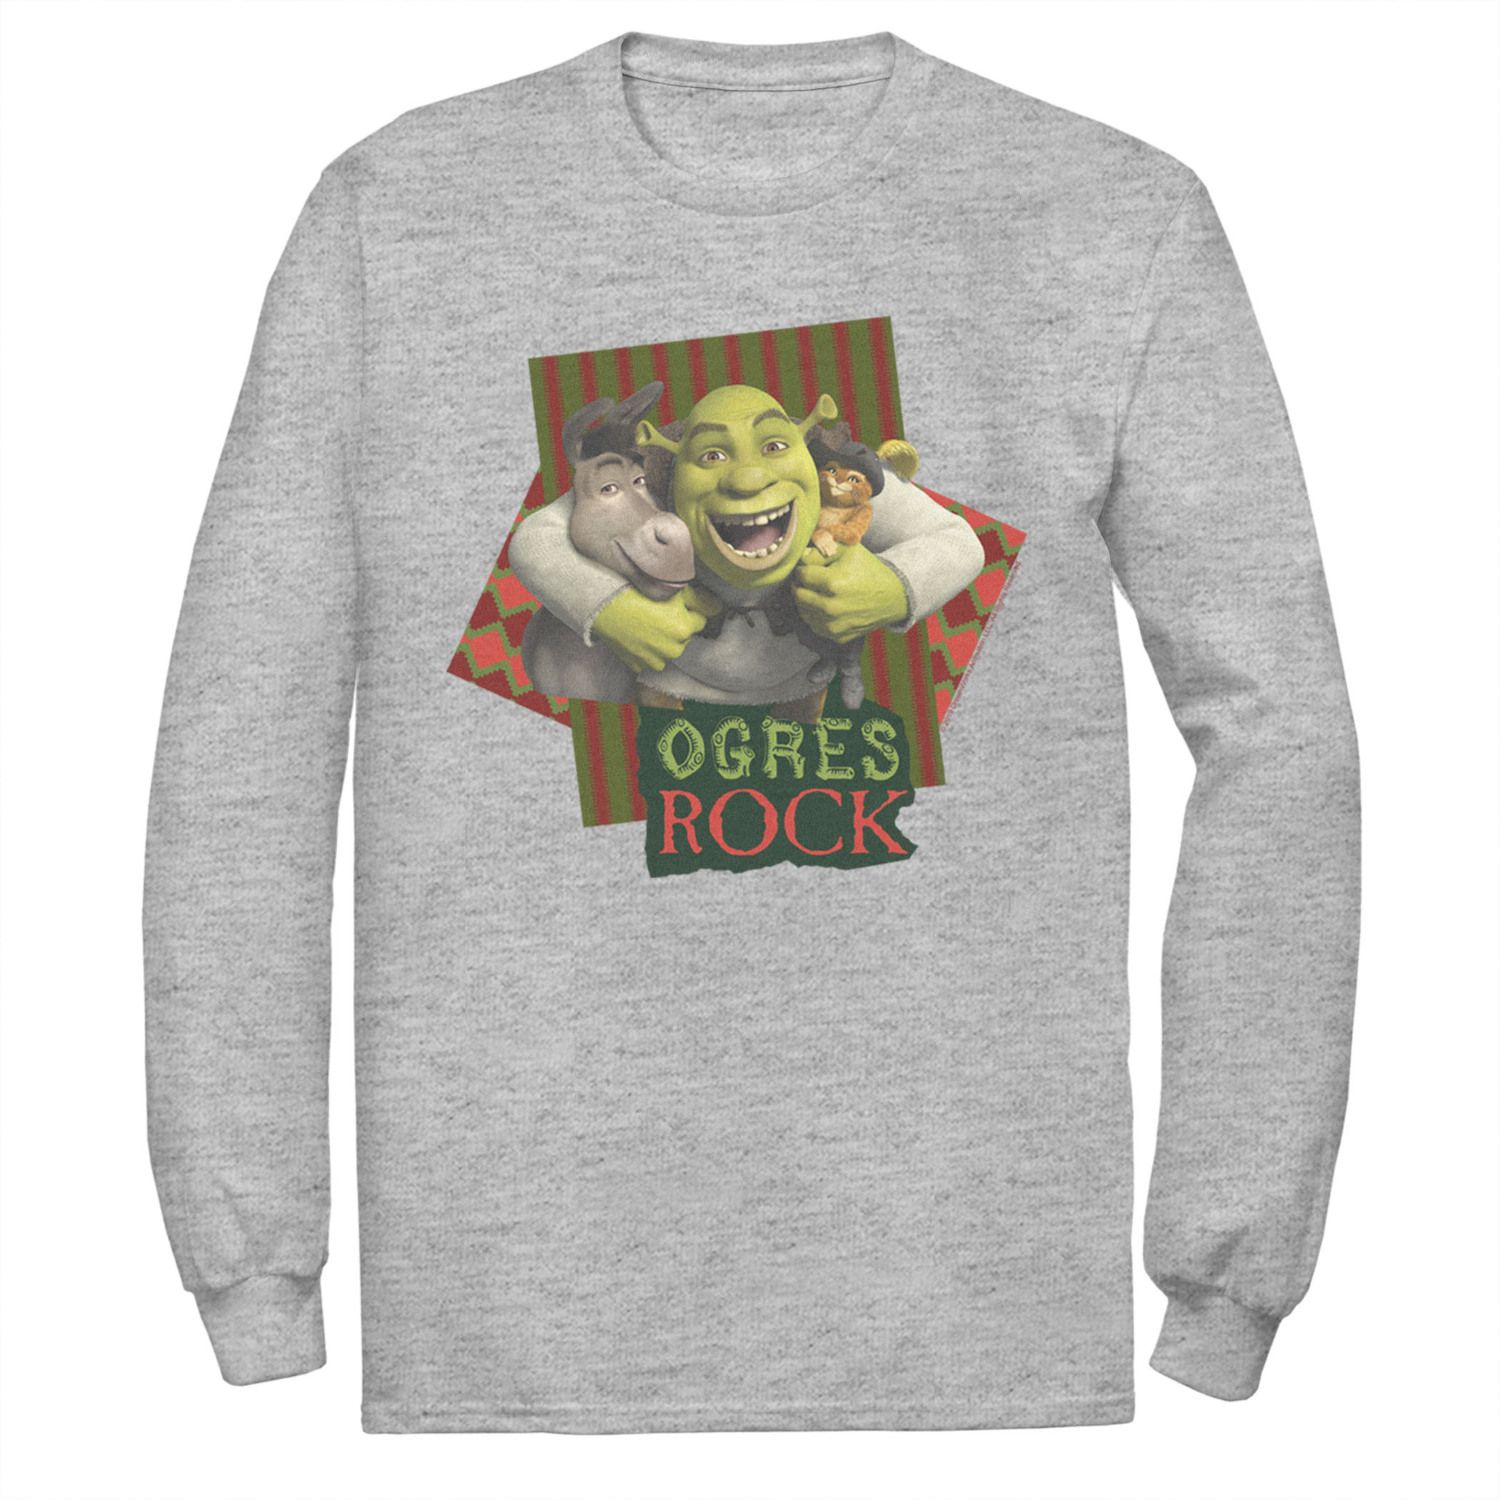 Image for Licensed Character Men's Shrek The Third Ogres Rock Best Friends Group Tee at Kohl's.